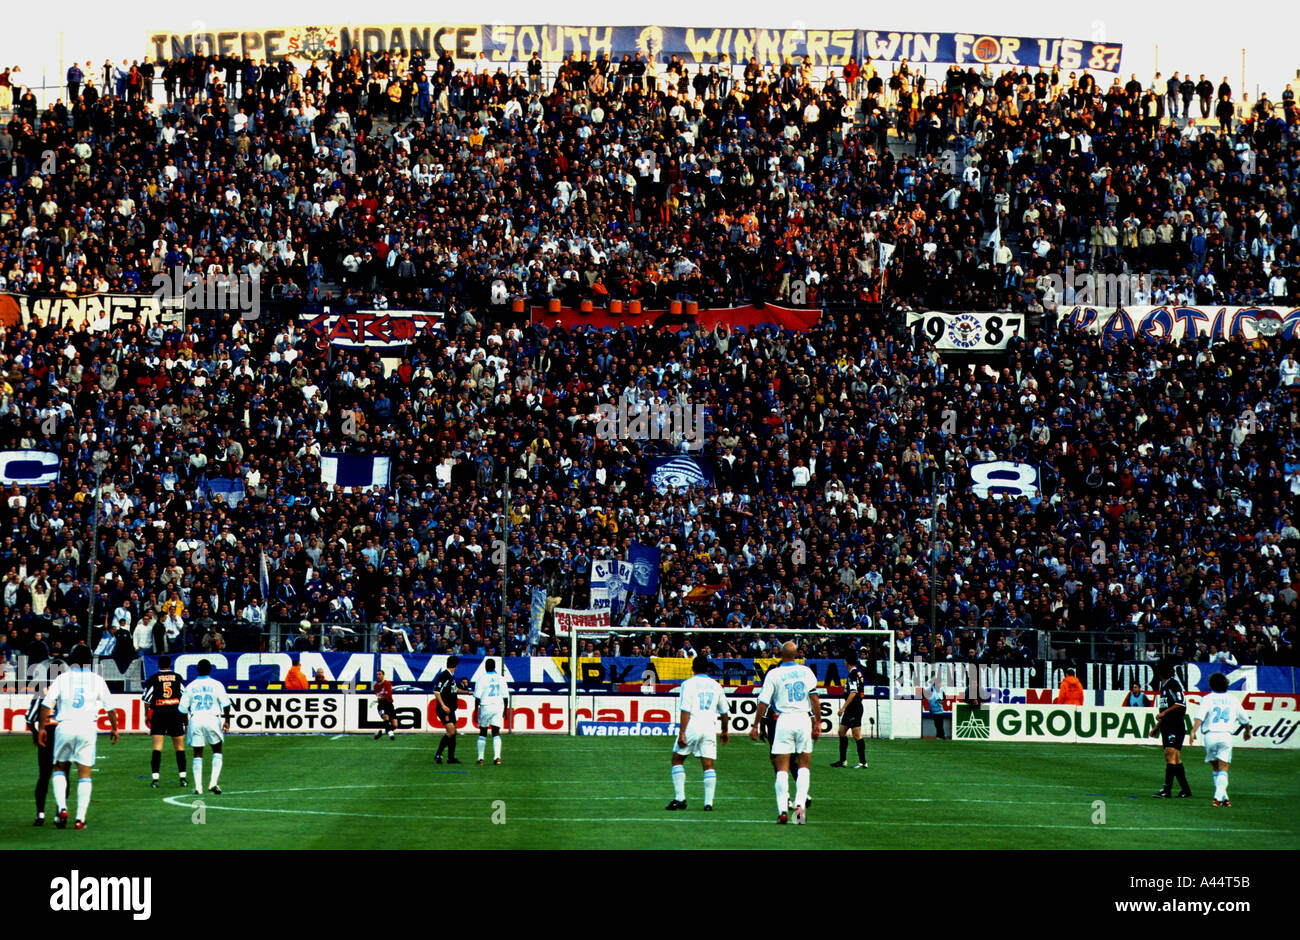 Olympique de Marseille - Wikipedia